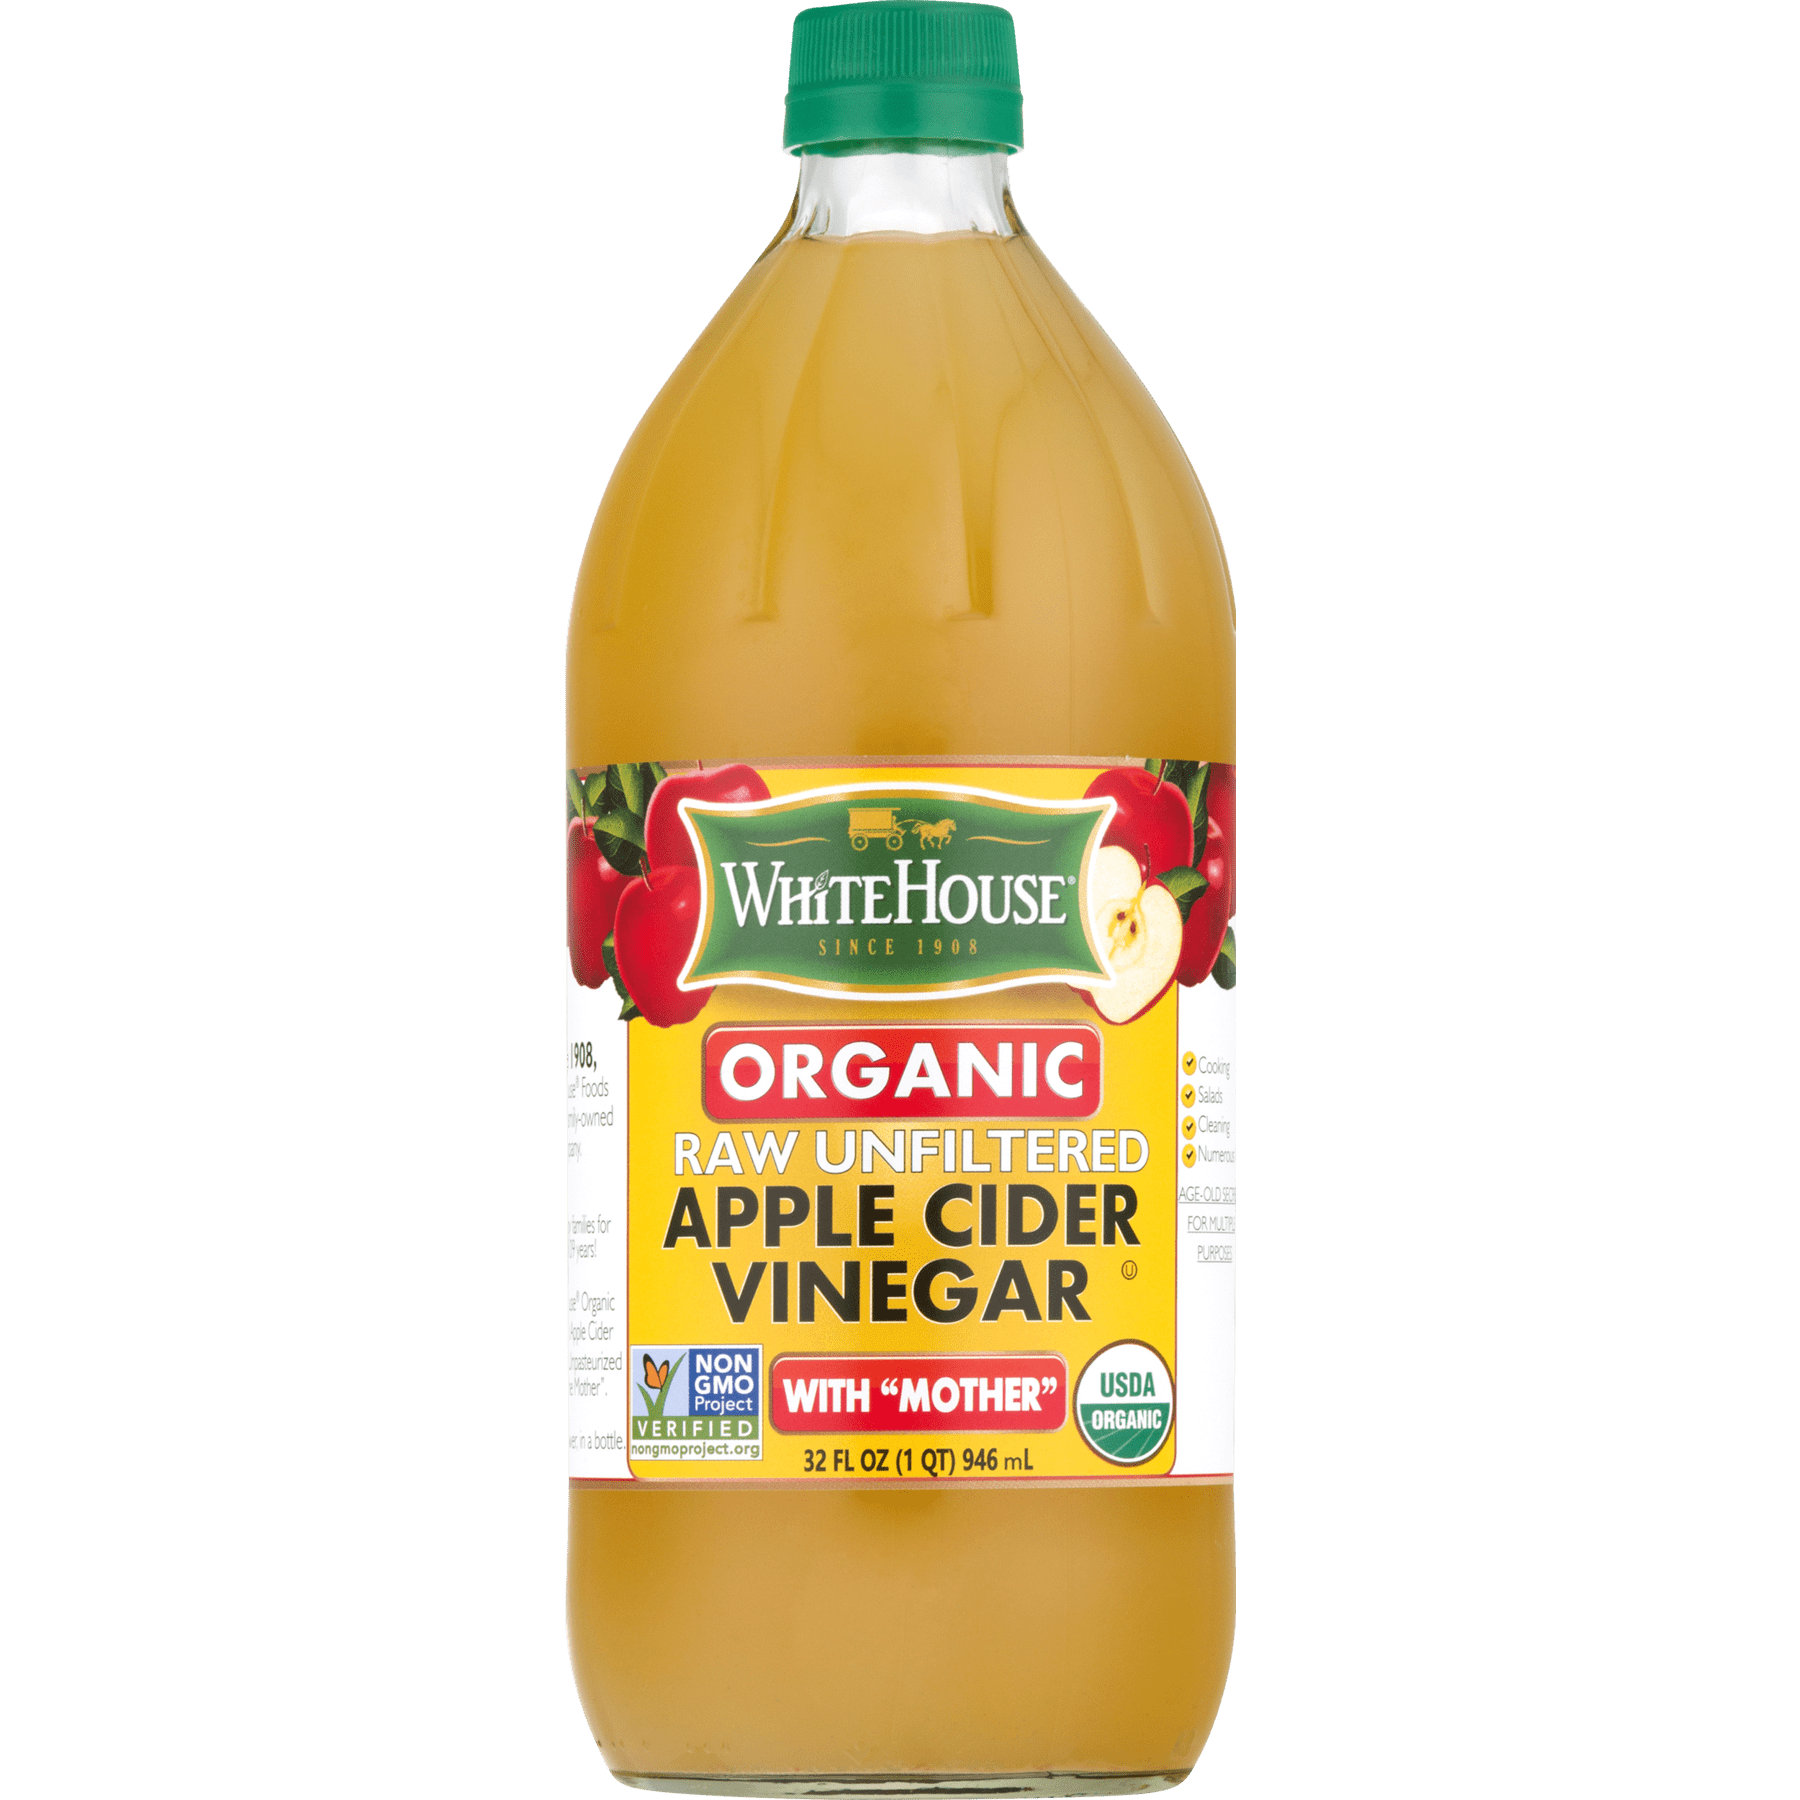 White House Organic, Raw Unfiltered, Apple Cider Vinegar, 32 fl oz